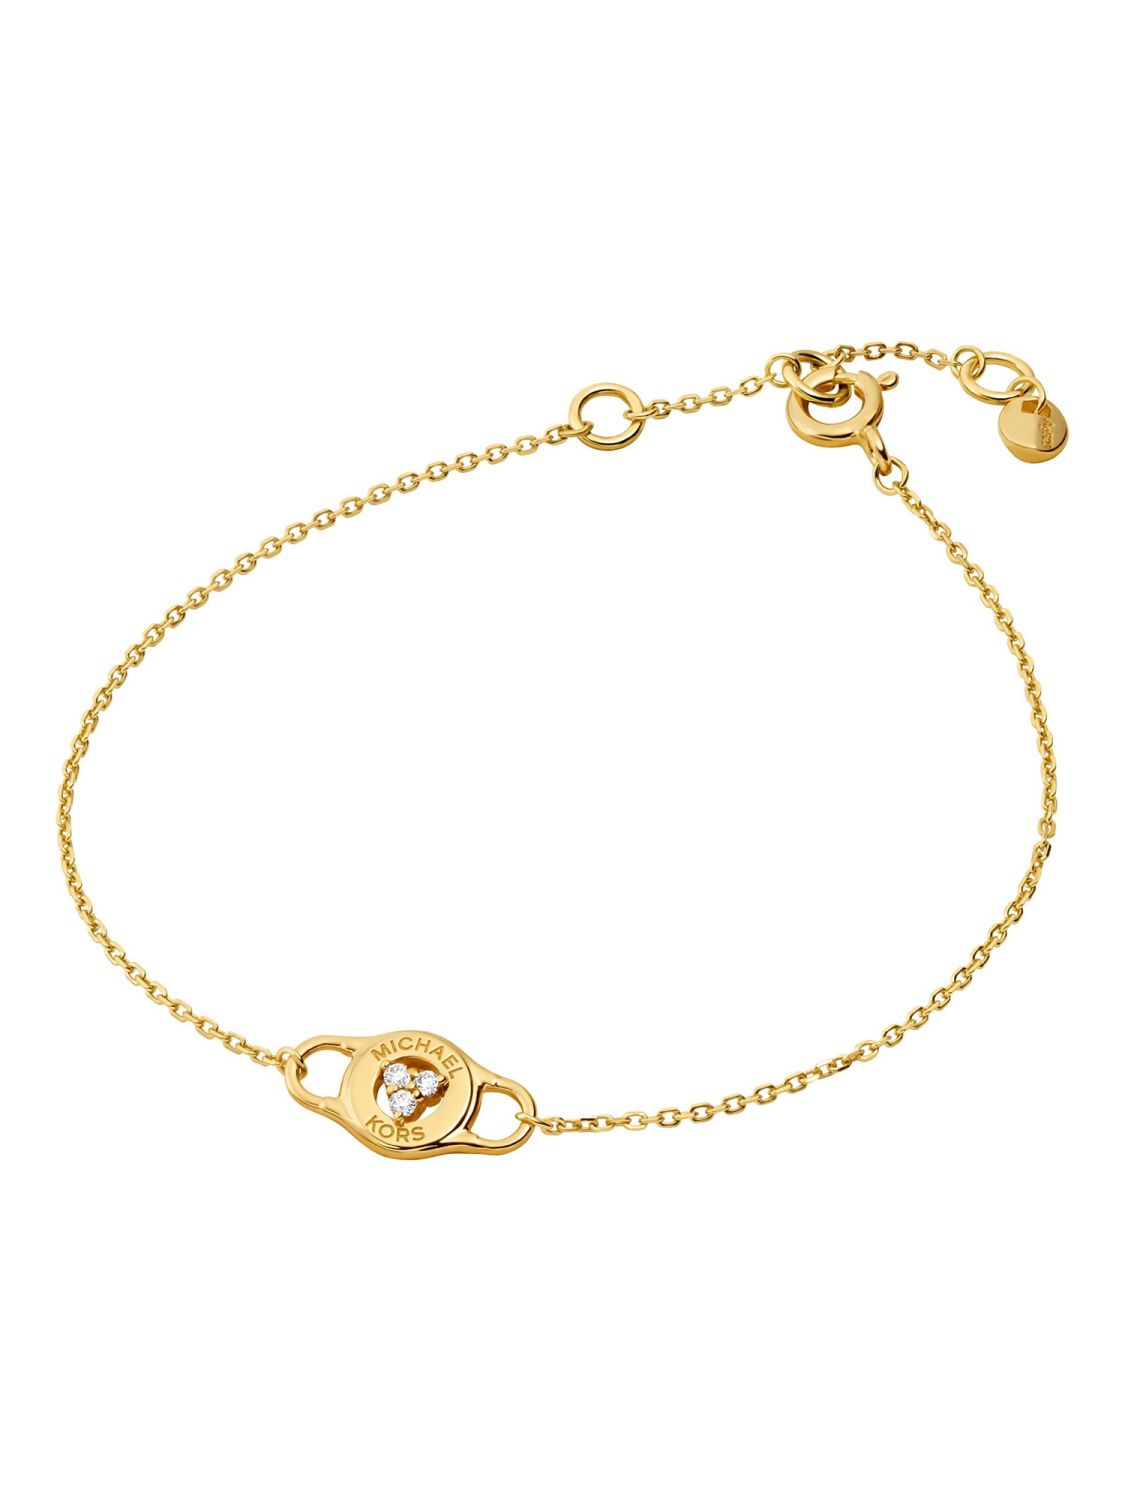 Women's Jewelry: Rings, Necklaces & Earrings | Michael Kors | Michael Kors